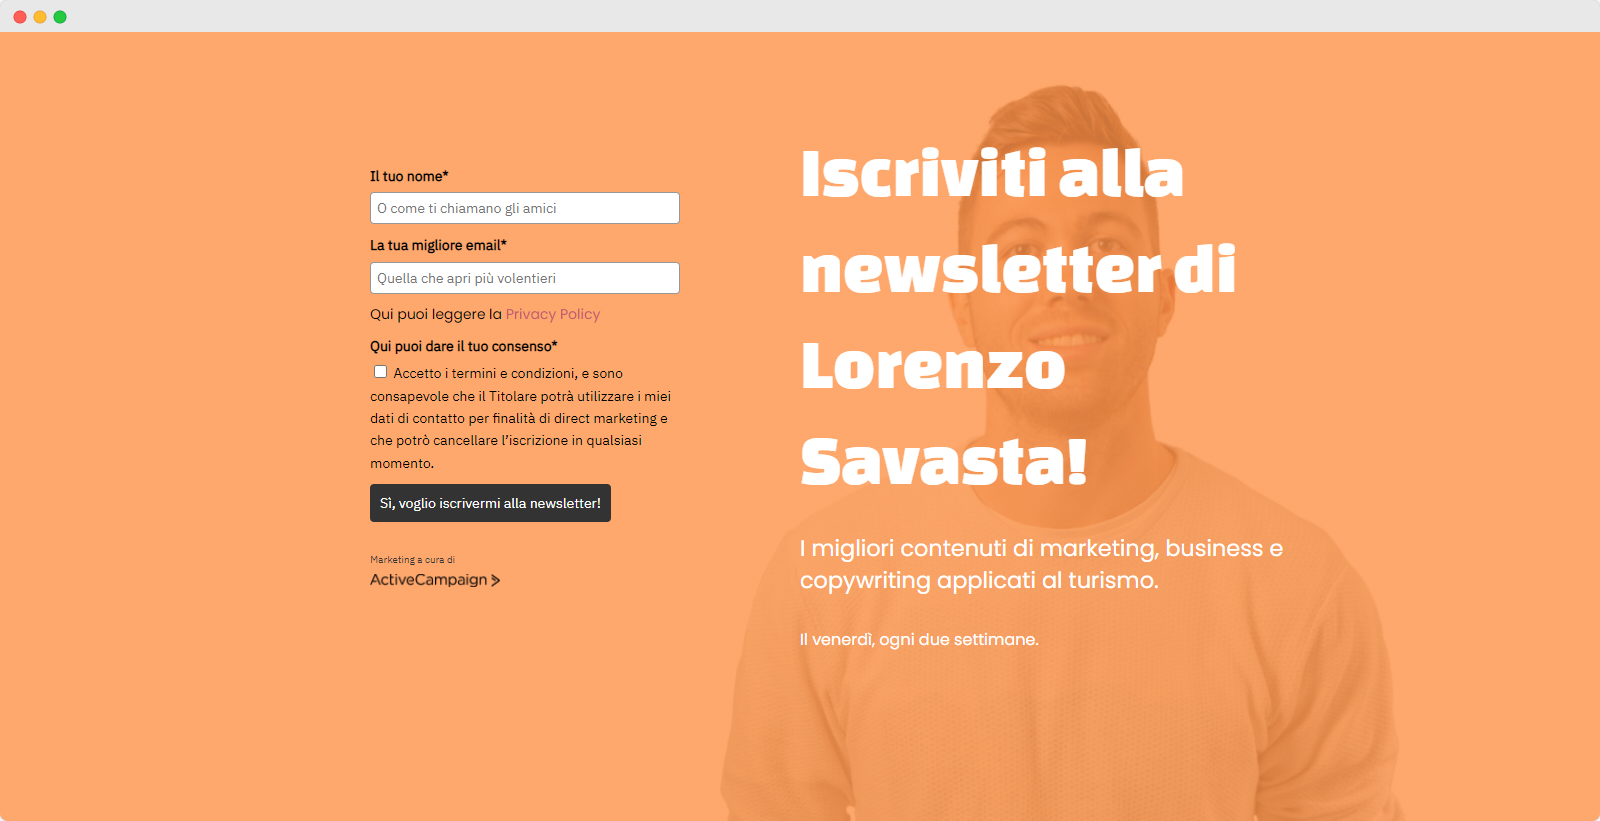 La newsletter di Lorenzo Savasta